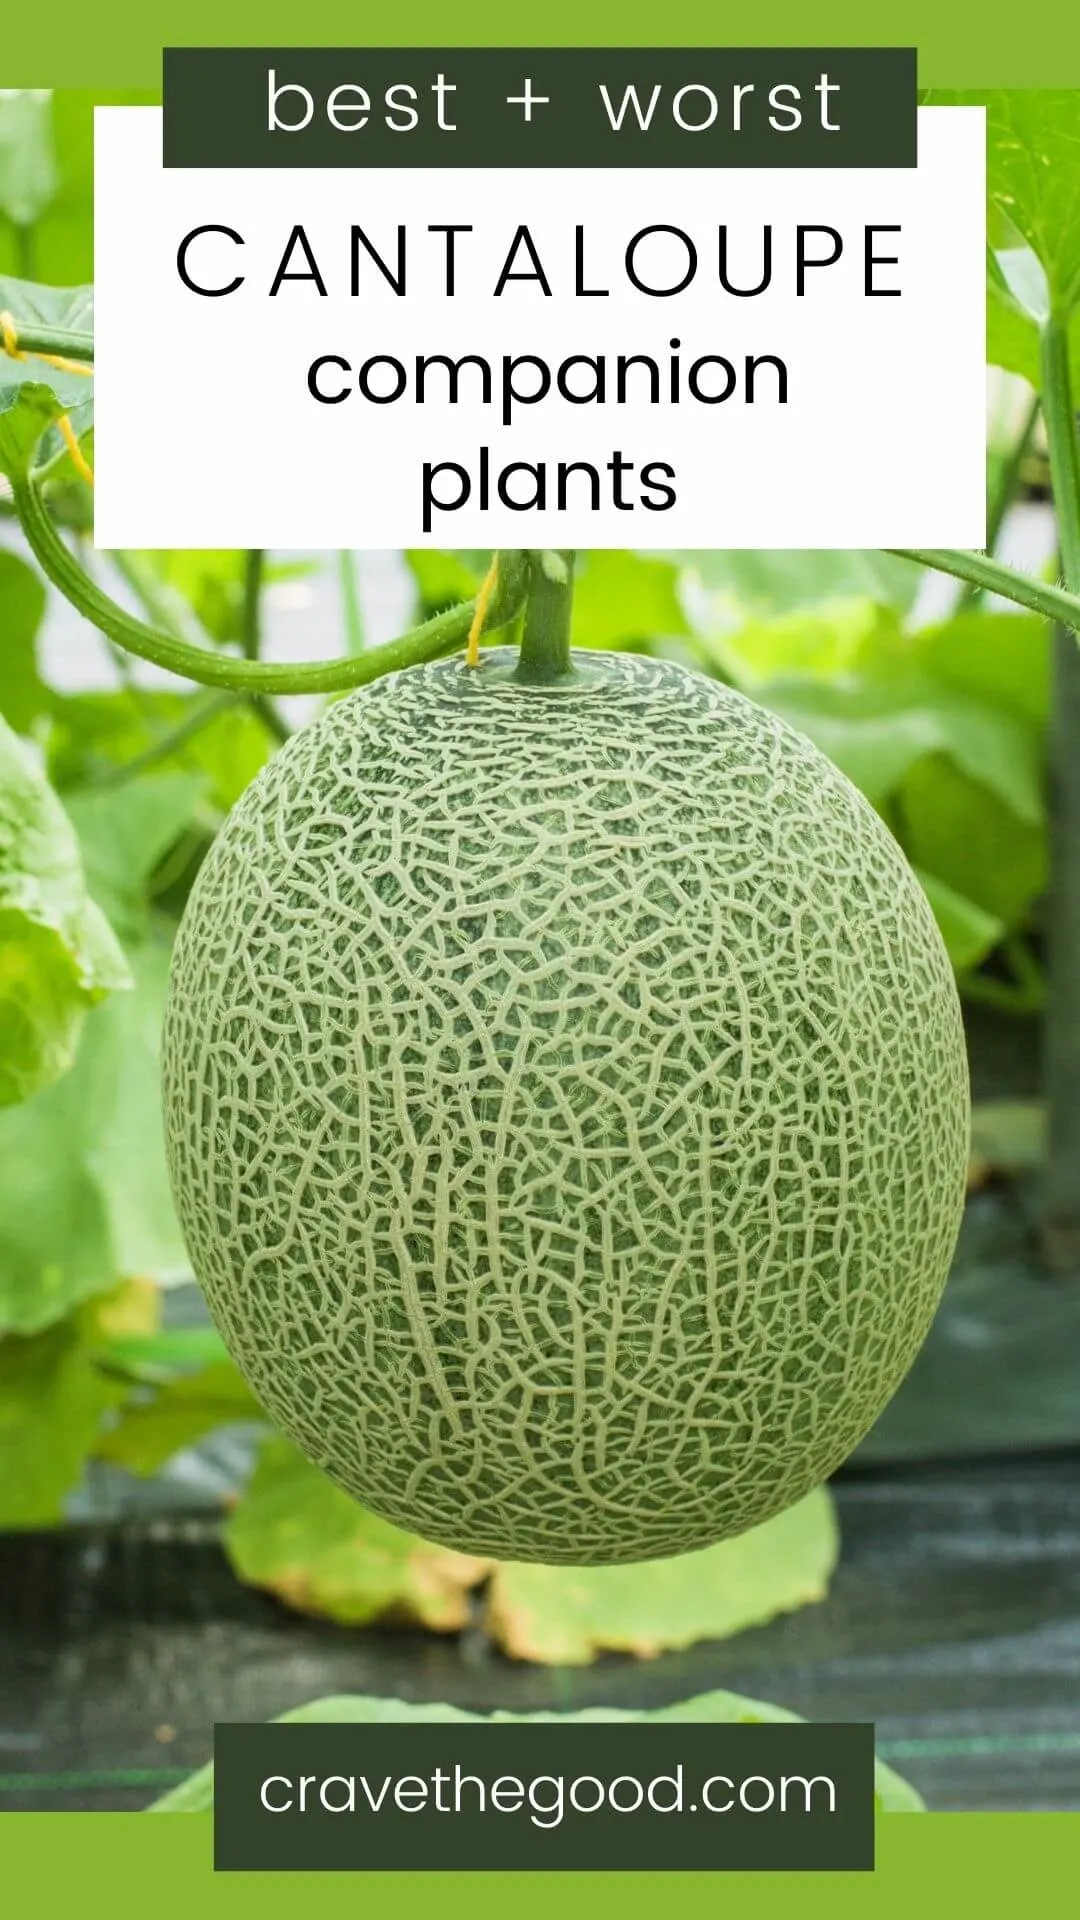 Best and worst cantaloupe companion plants. 